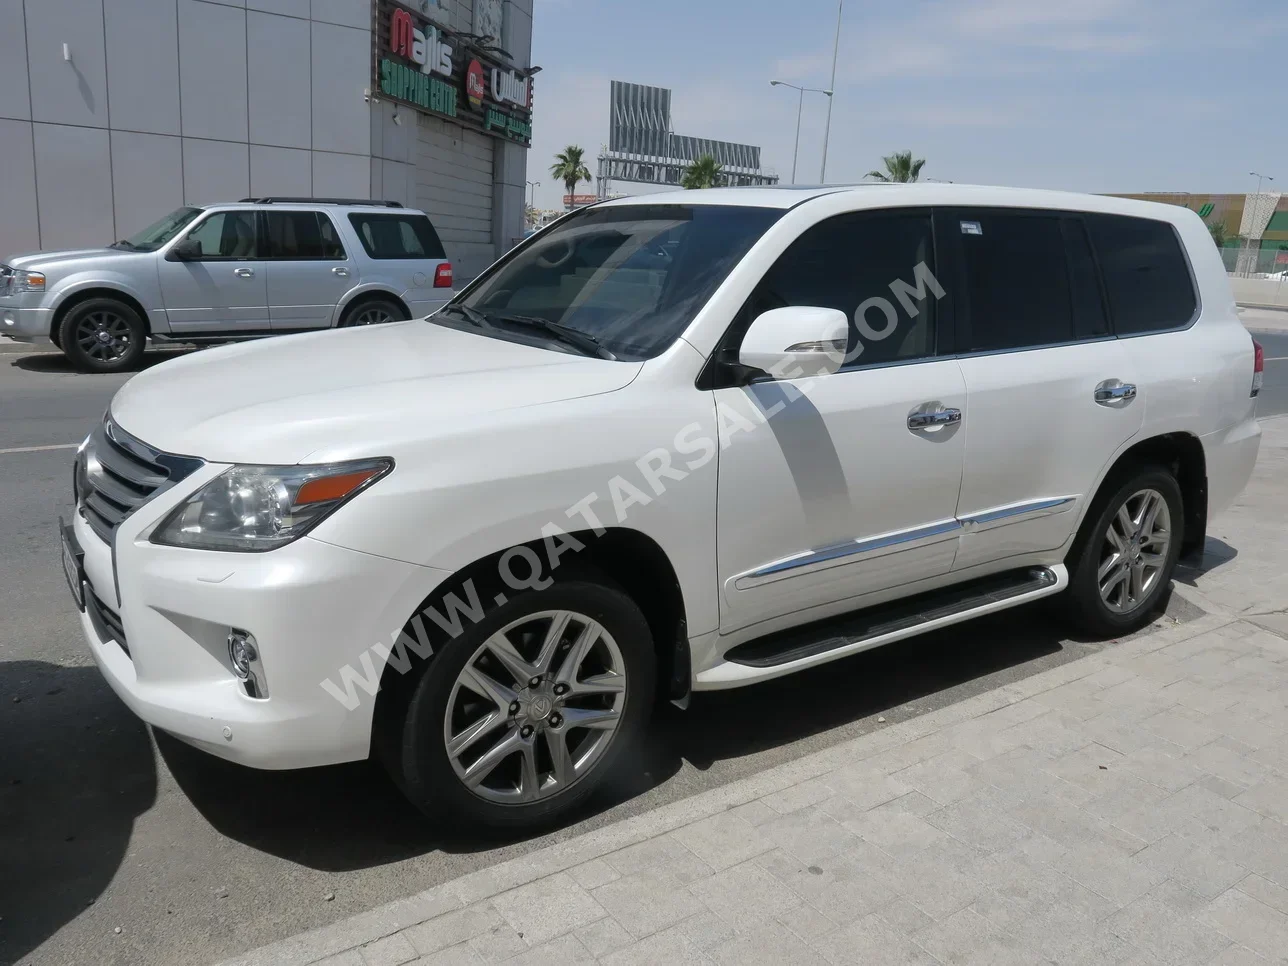 Lexus  LX  570  2014  Automatic  83,000 Km  8 Cylinder  Four Wheel Drive (4WD)  SUV  White